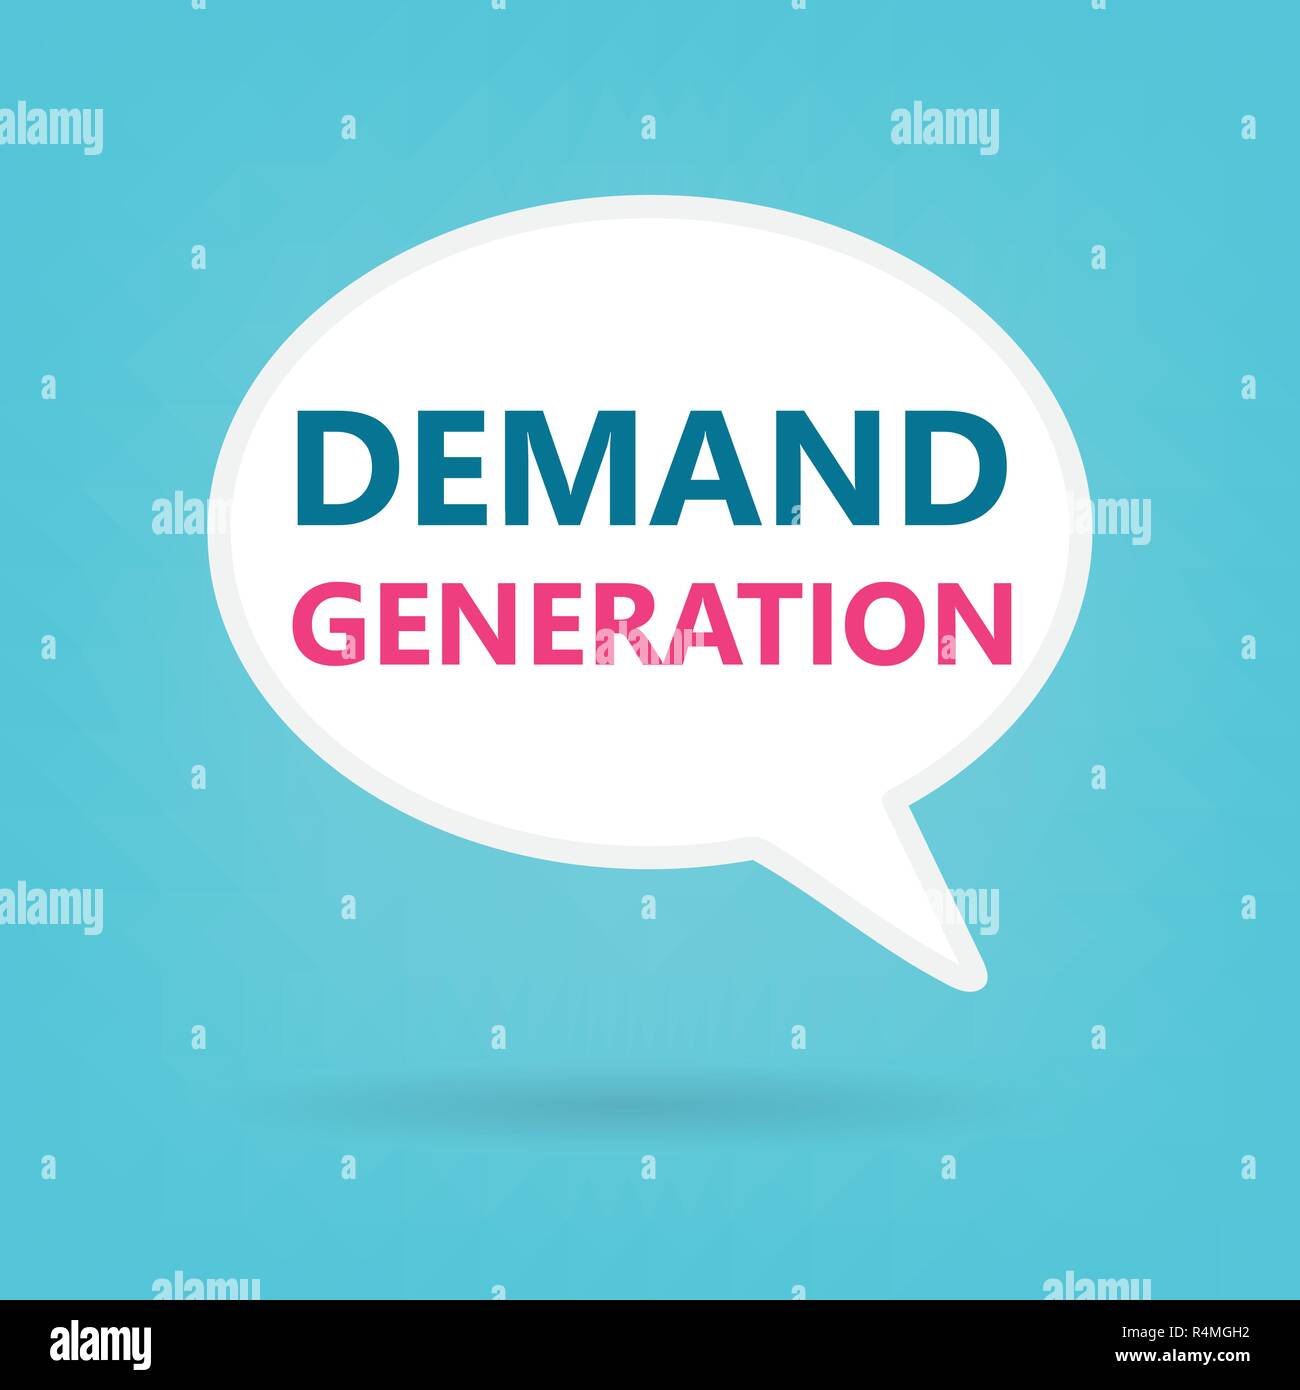 demand generation text on a bubble speech - vector illustration Stock Vector